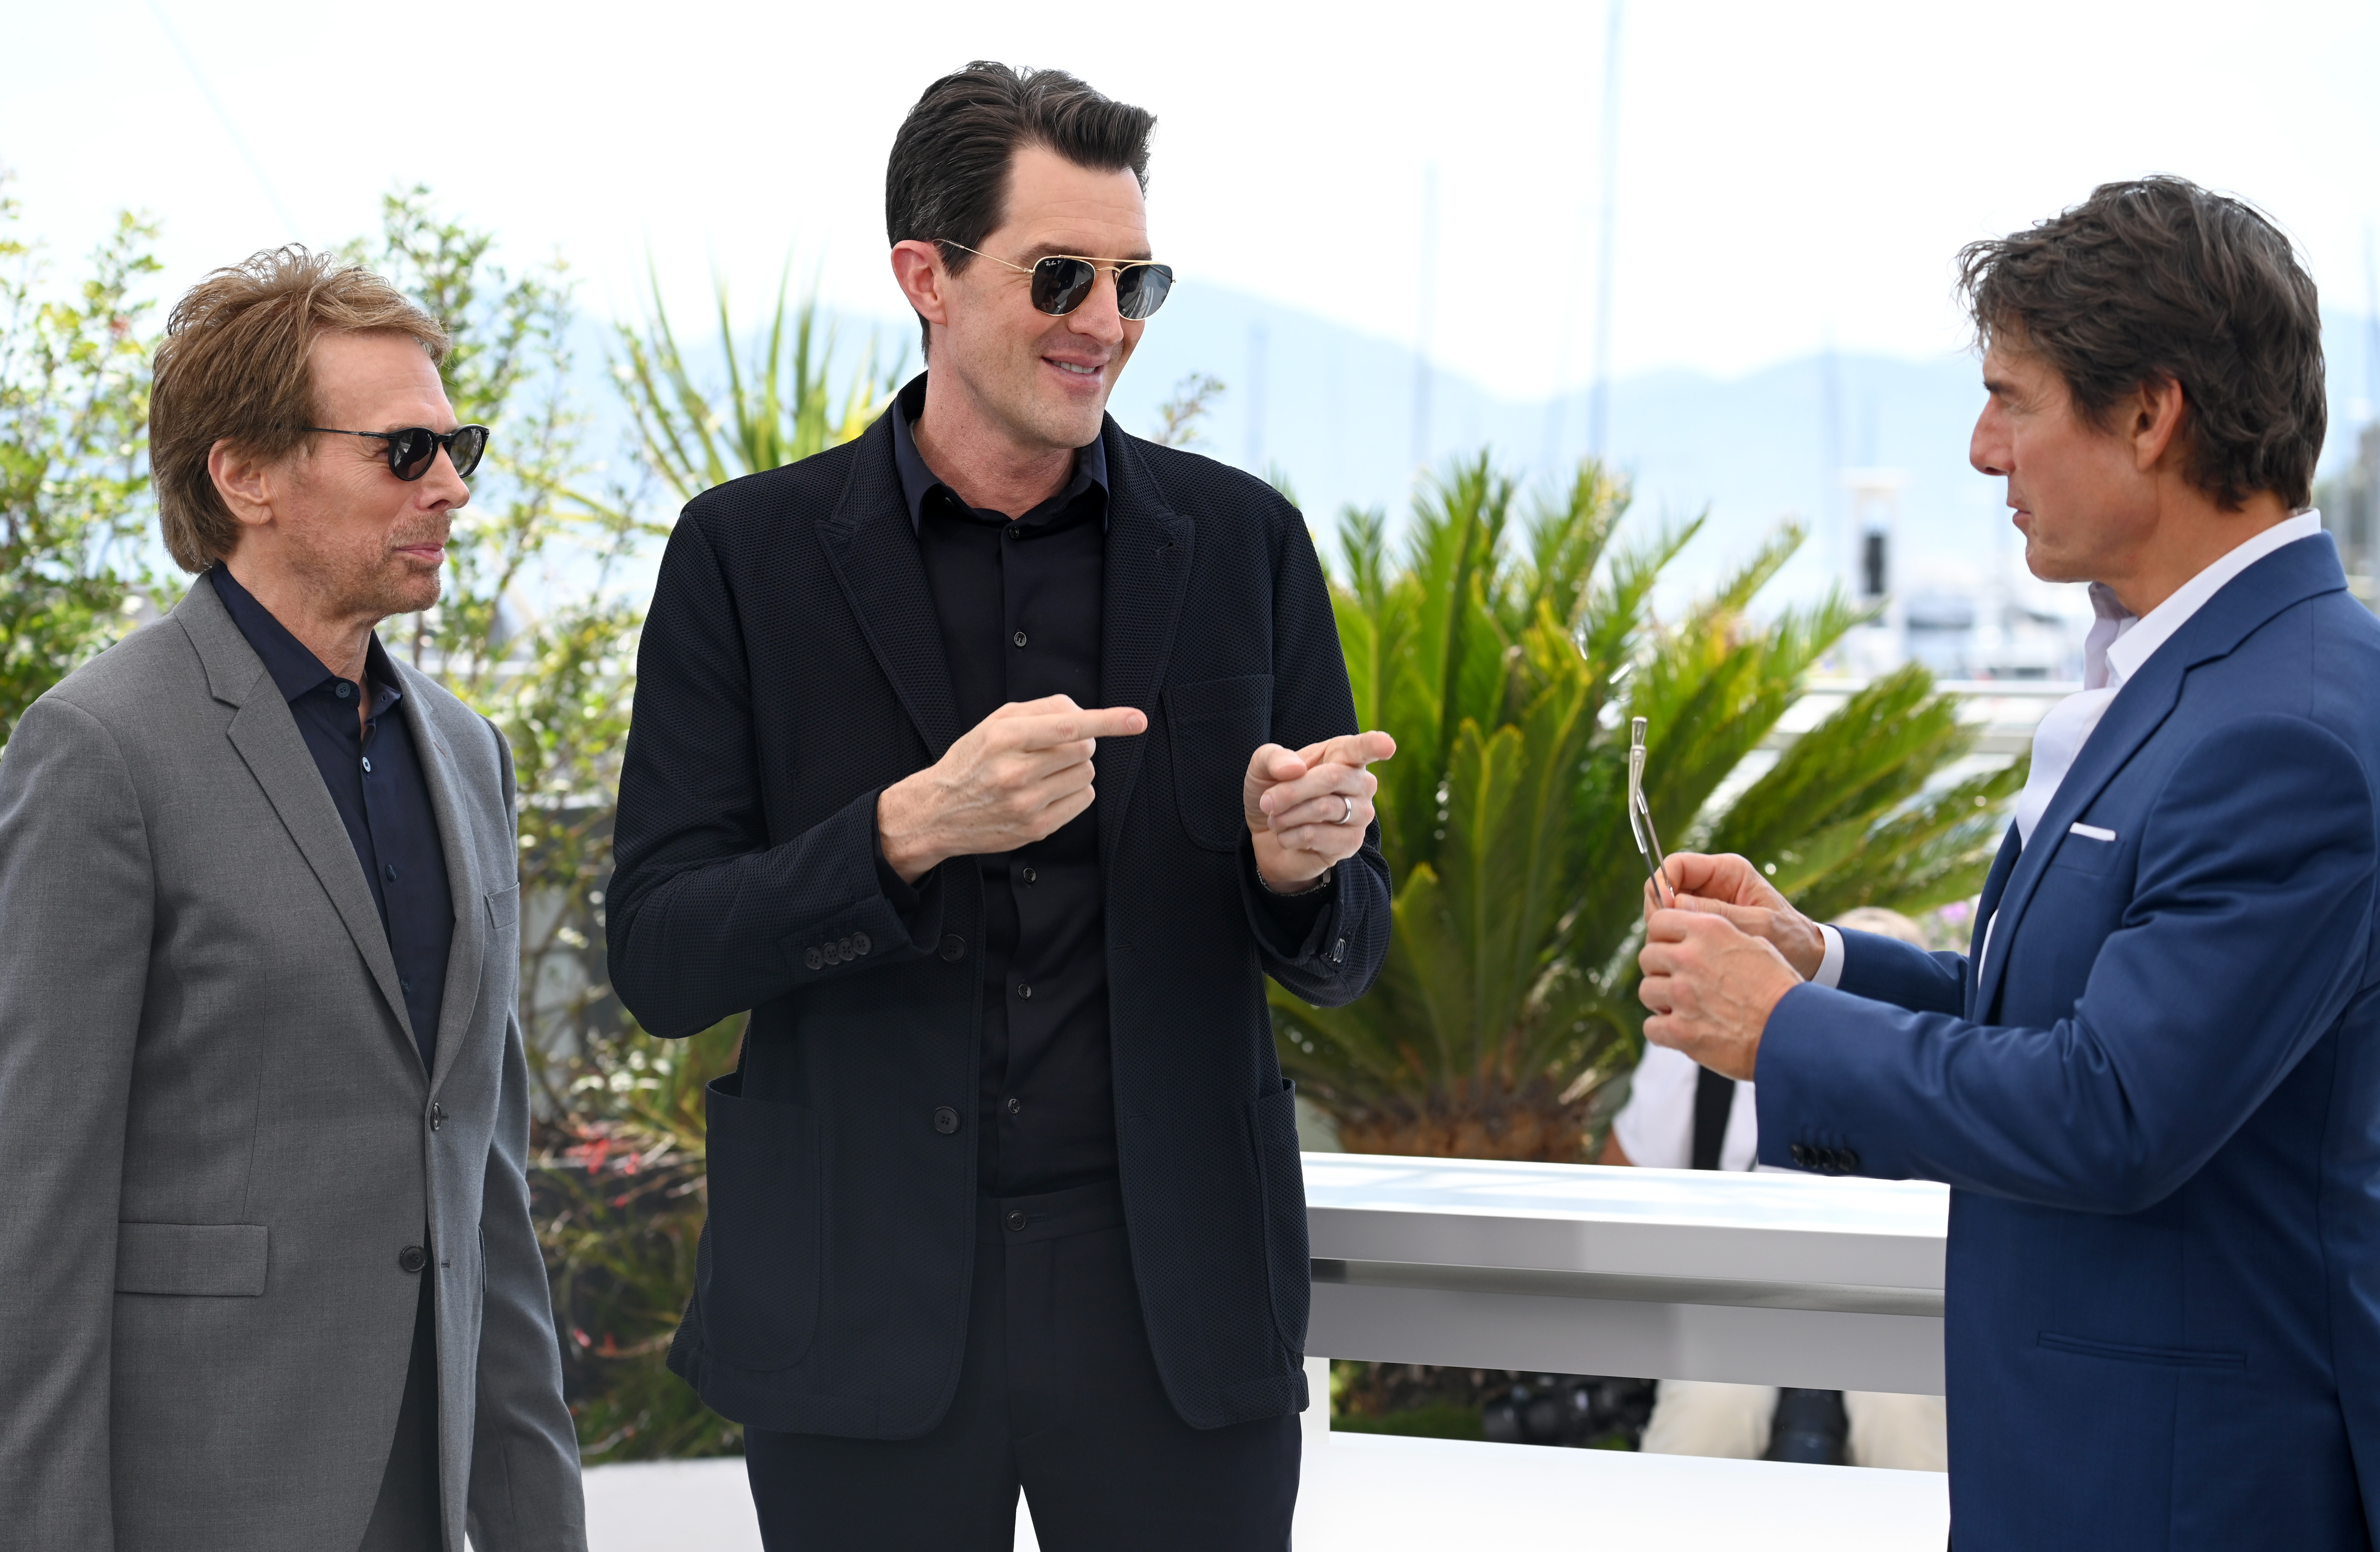 Jerry Bruckheimer, director Joseph Kosinski, and Tom Cruise attend a photocall for the sequel Top Gun: Maverick at the Cannes film festival